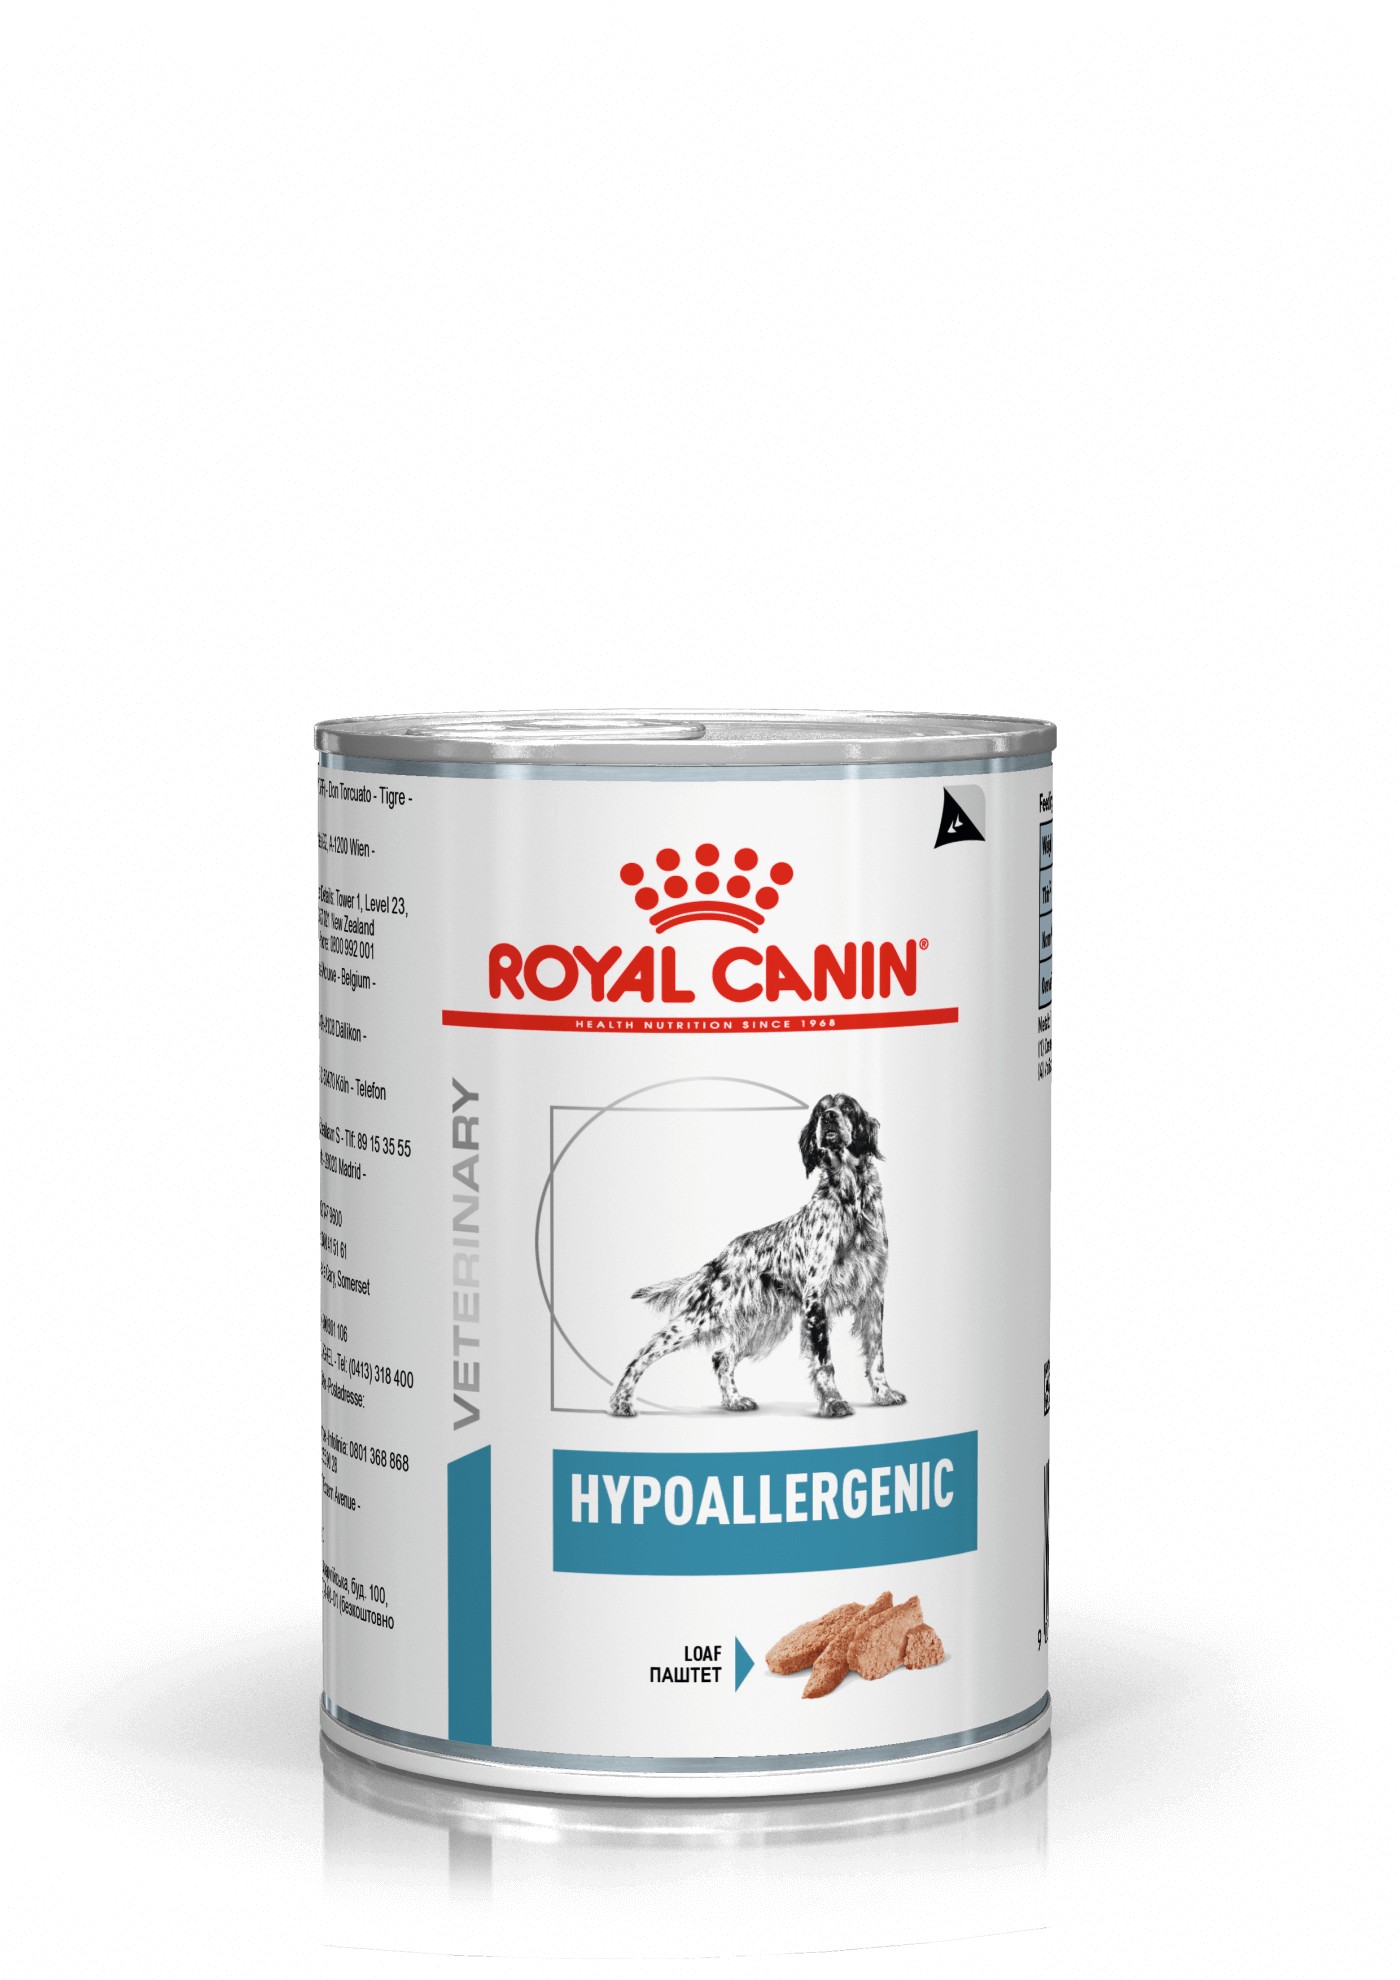 Royal Canin Veterinary Hypoallergenic pâtée pour chien (400 g)